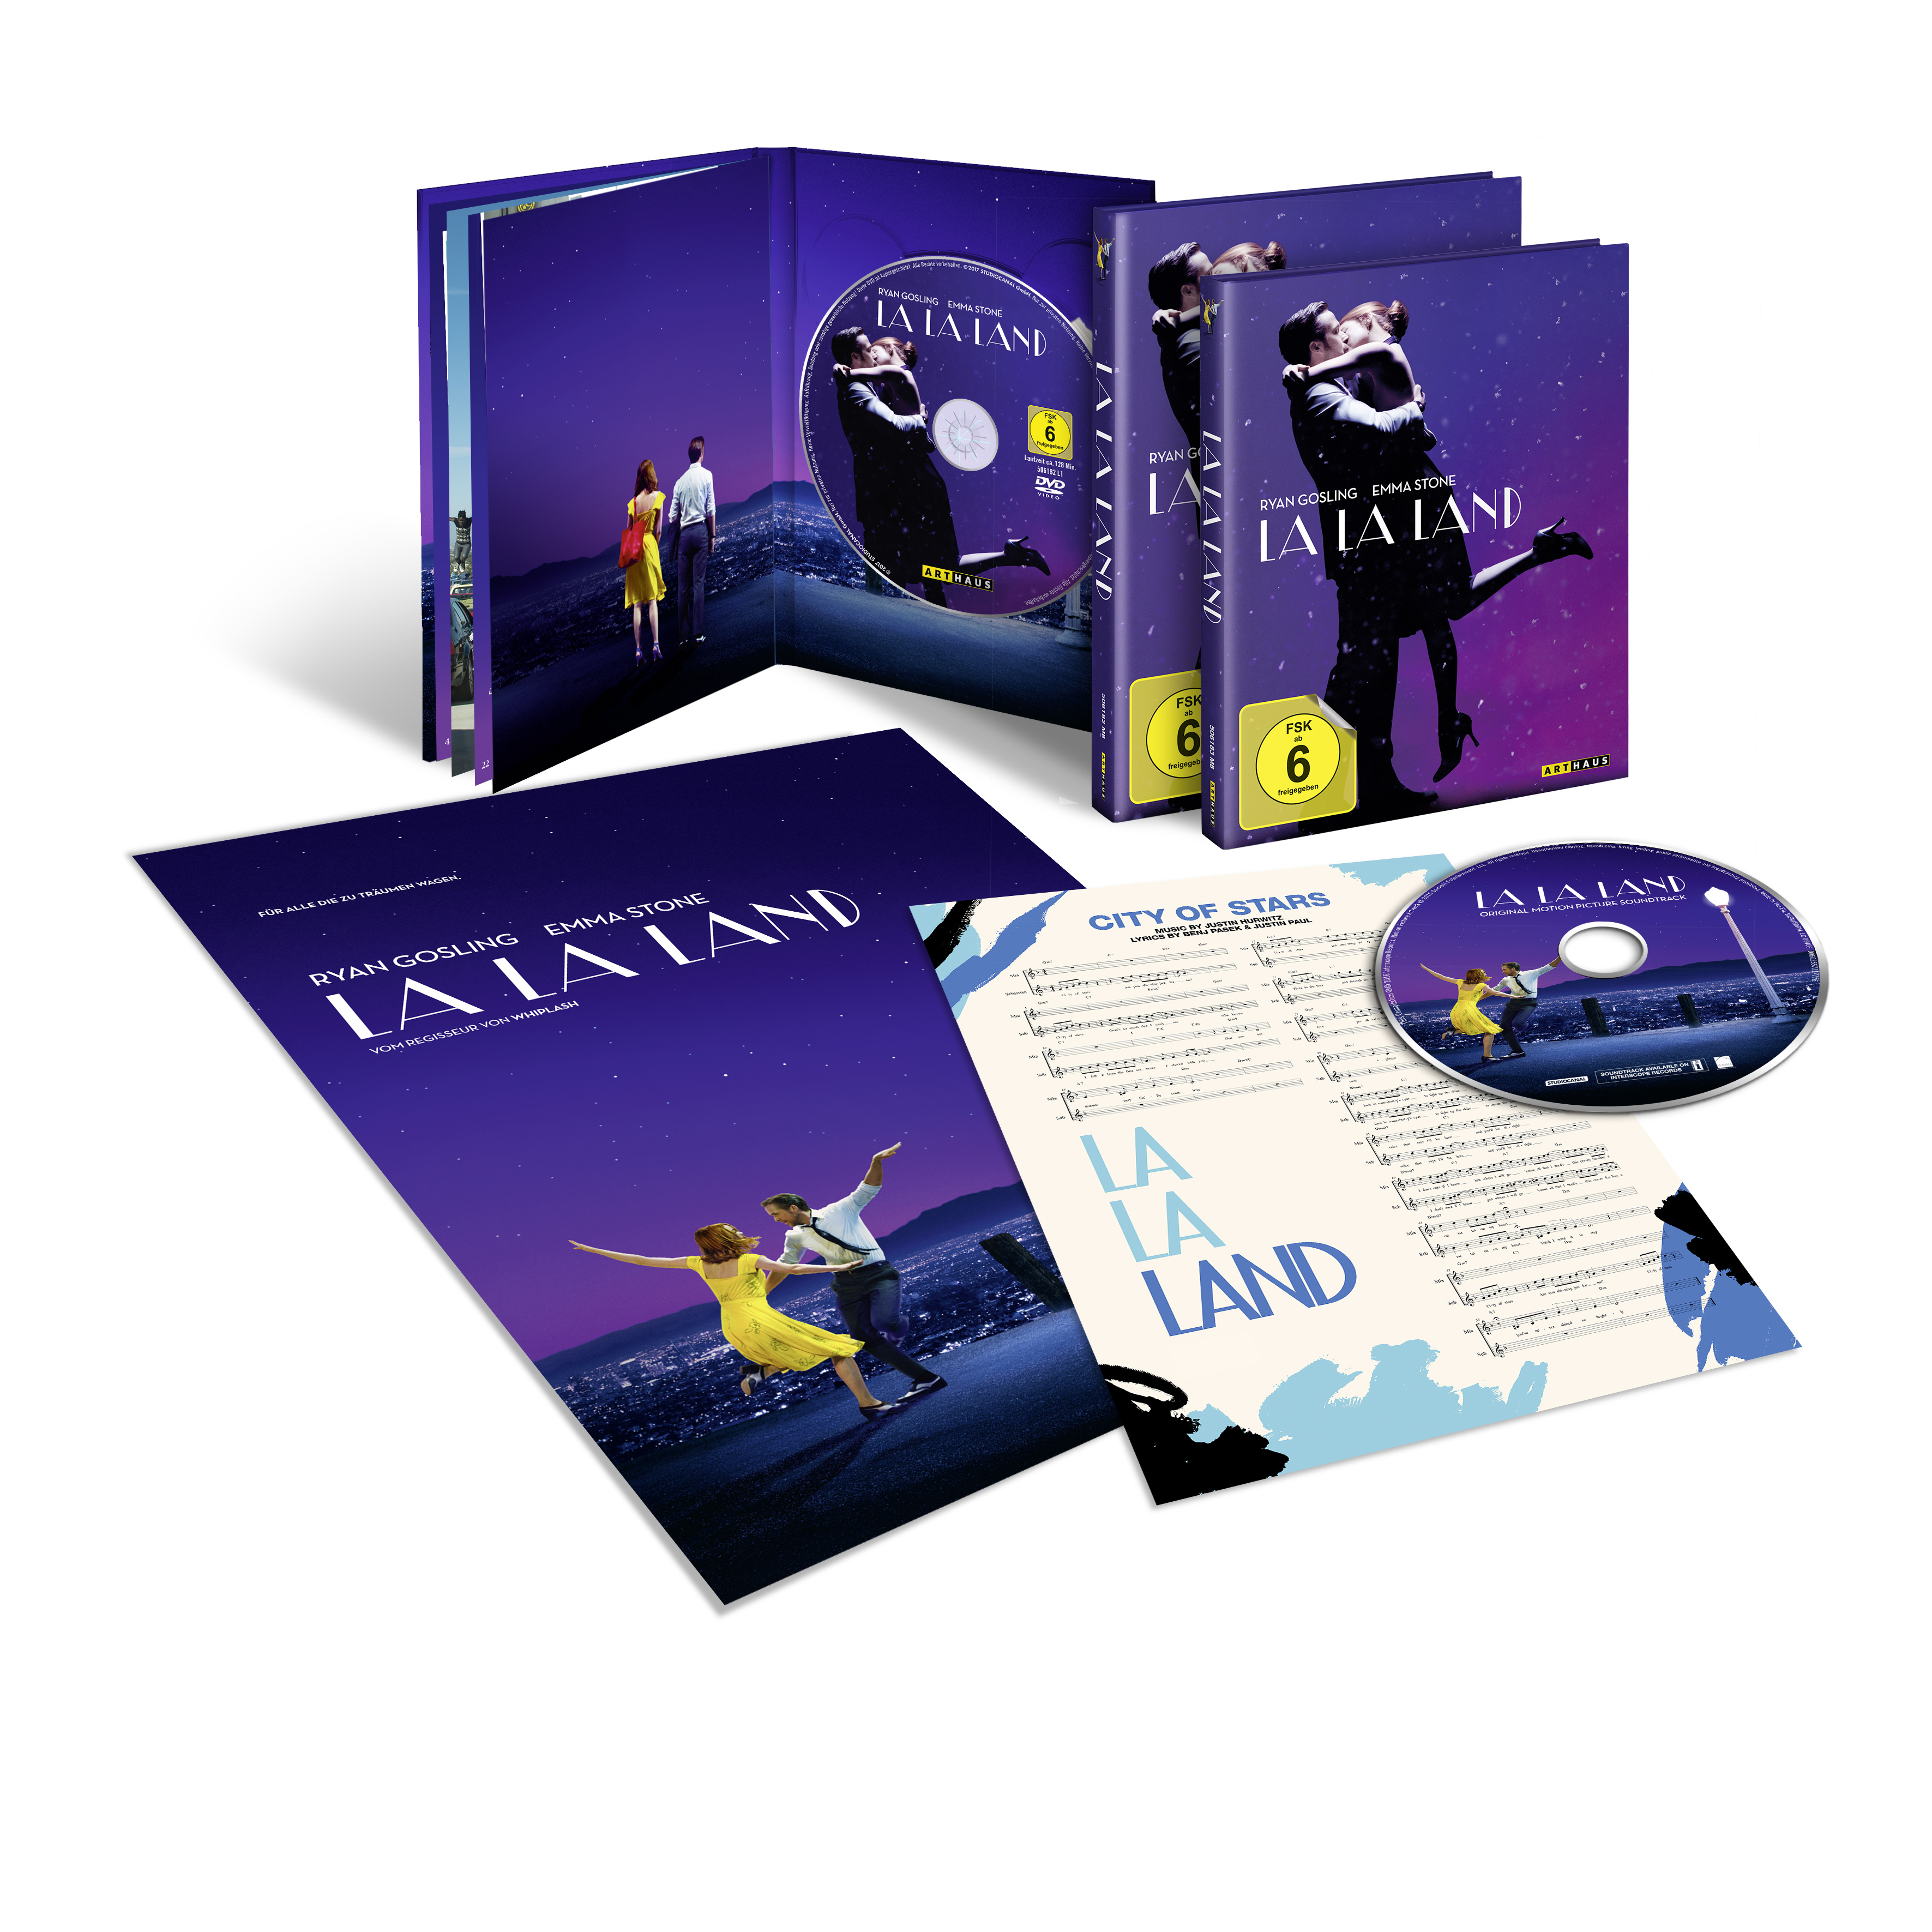 Edition) La La Land Blu-ray (Soundtrack